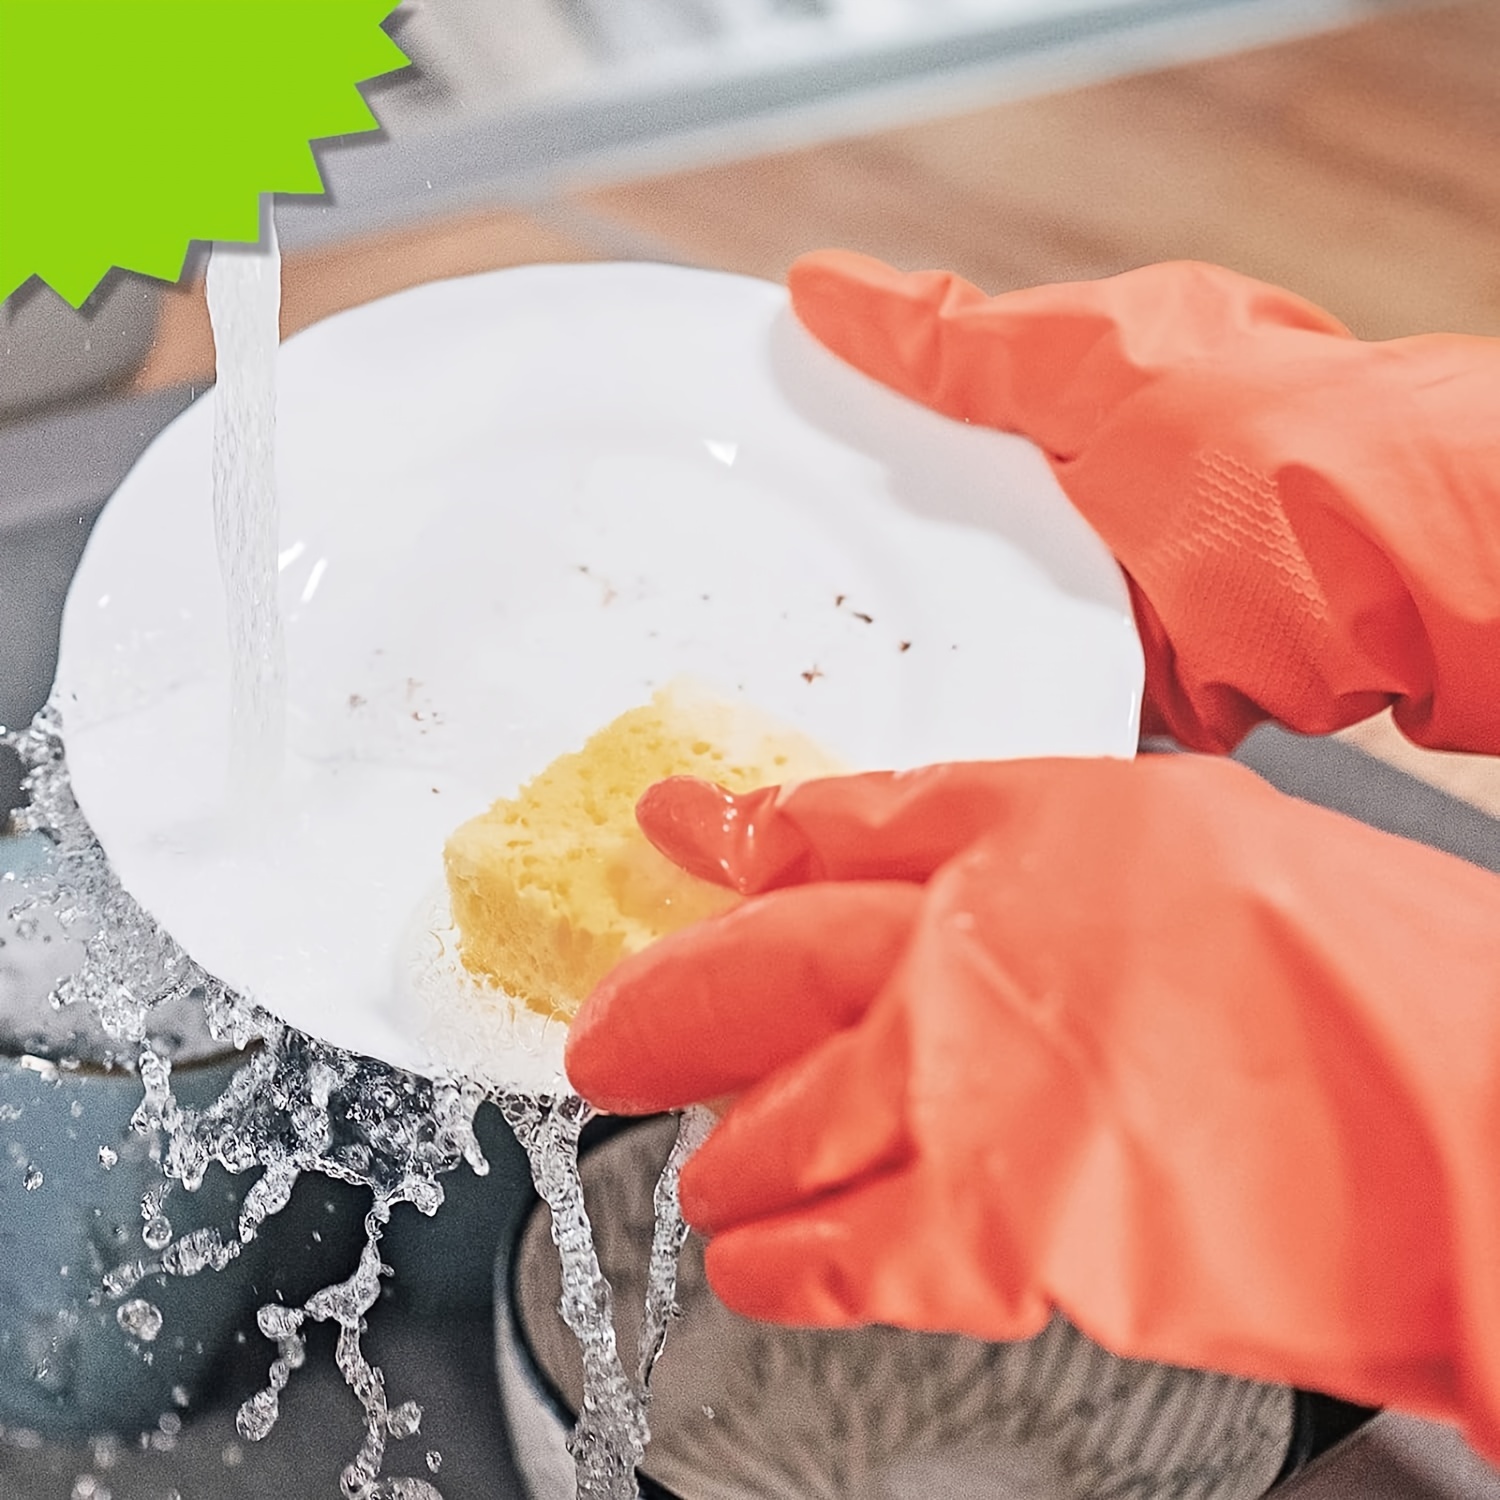  JJMG 3-Piece Multipurpose Silicone Scrub Scrubber Sponge for  Dishwashing, Make up Brush Cleaner : Health & Household